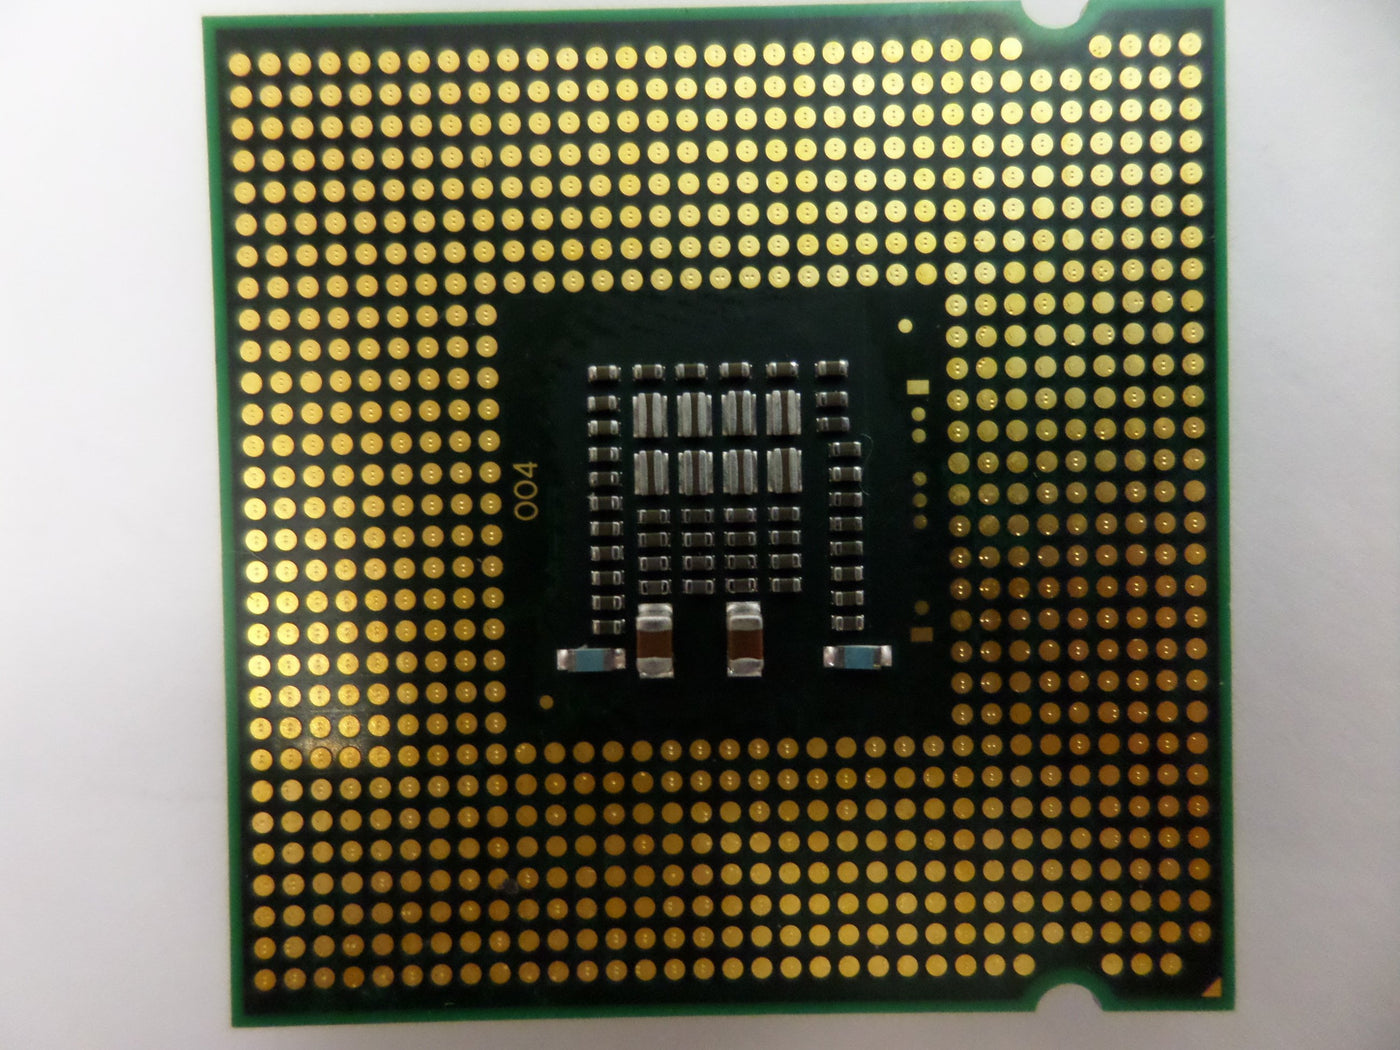 PR24370_E7400_Intel Core 2 Duo 2.80GHz 3MB 1066MHz LGA775 CPU - Image2